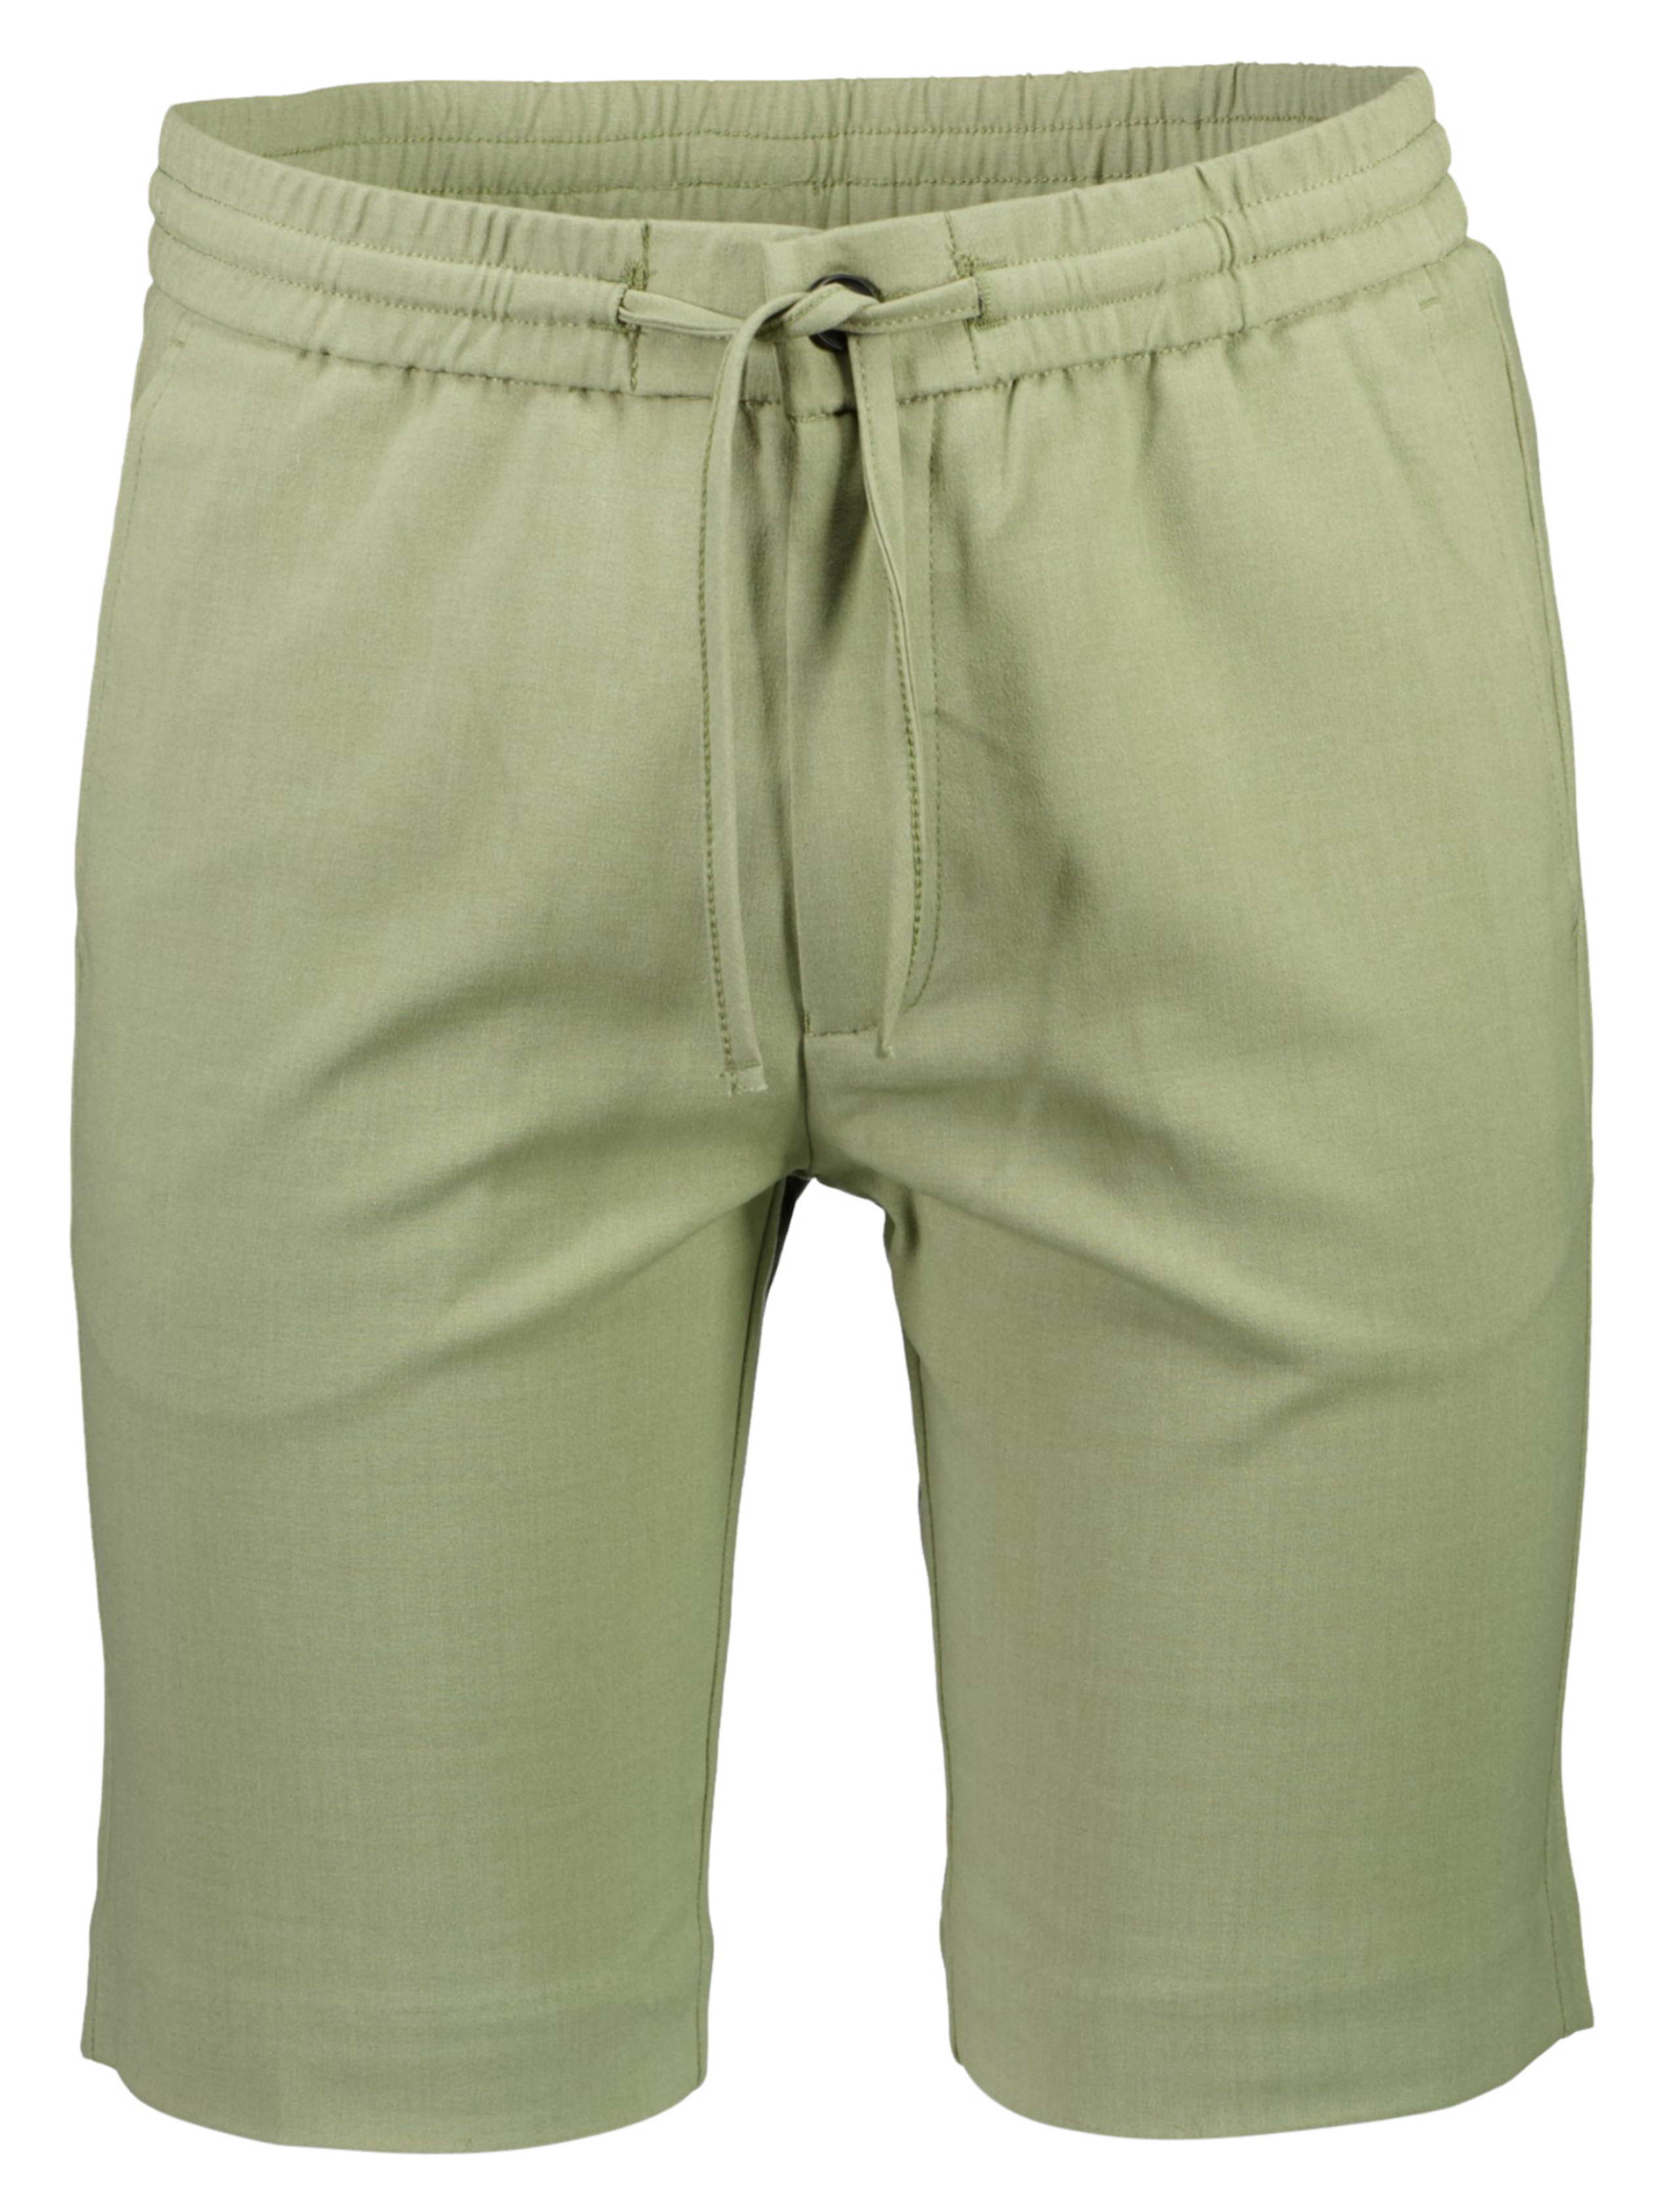 Lindbergh Casual shorts grön / lt army mix